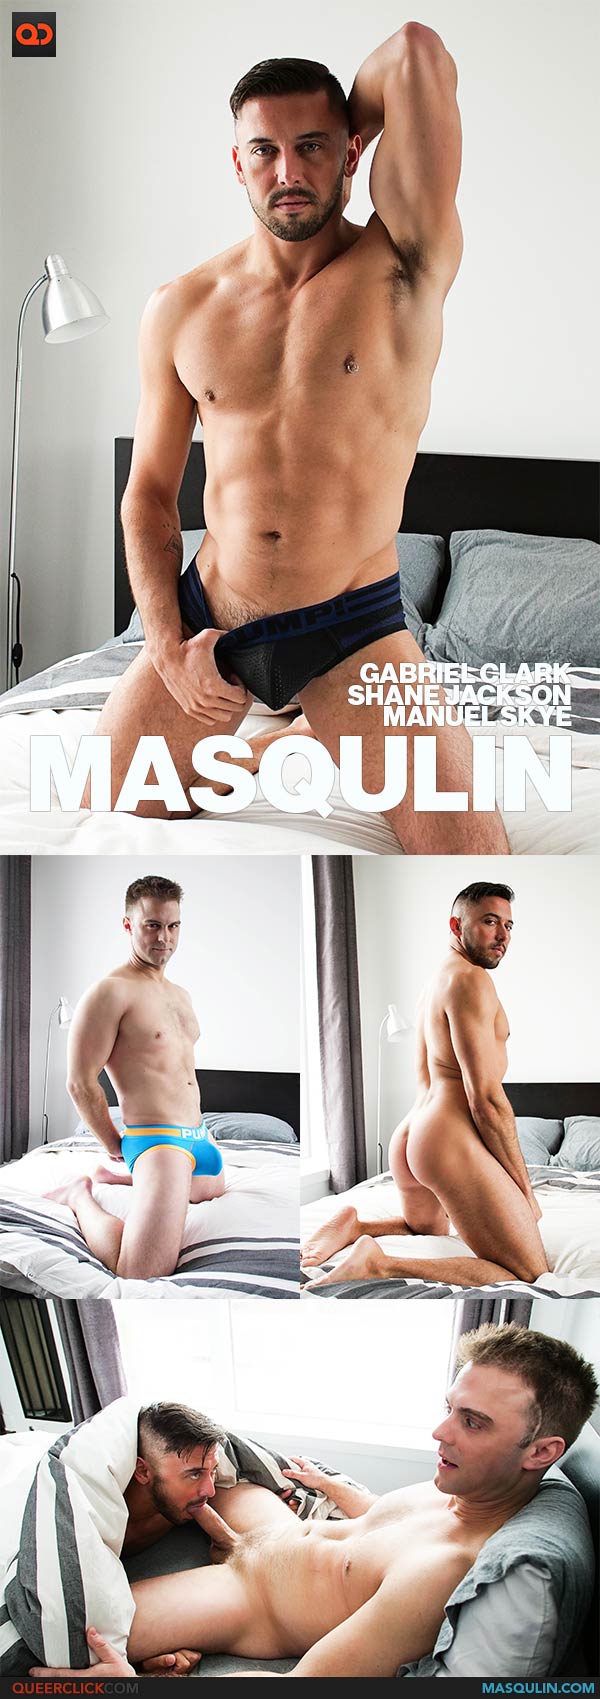 Masqulin: Manuel Skye , Shane Jackson and the return of Gabriel Clark